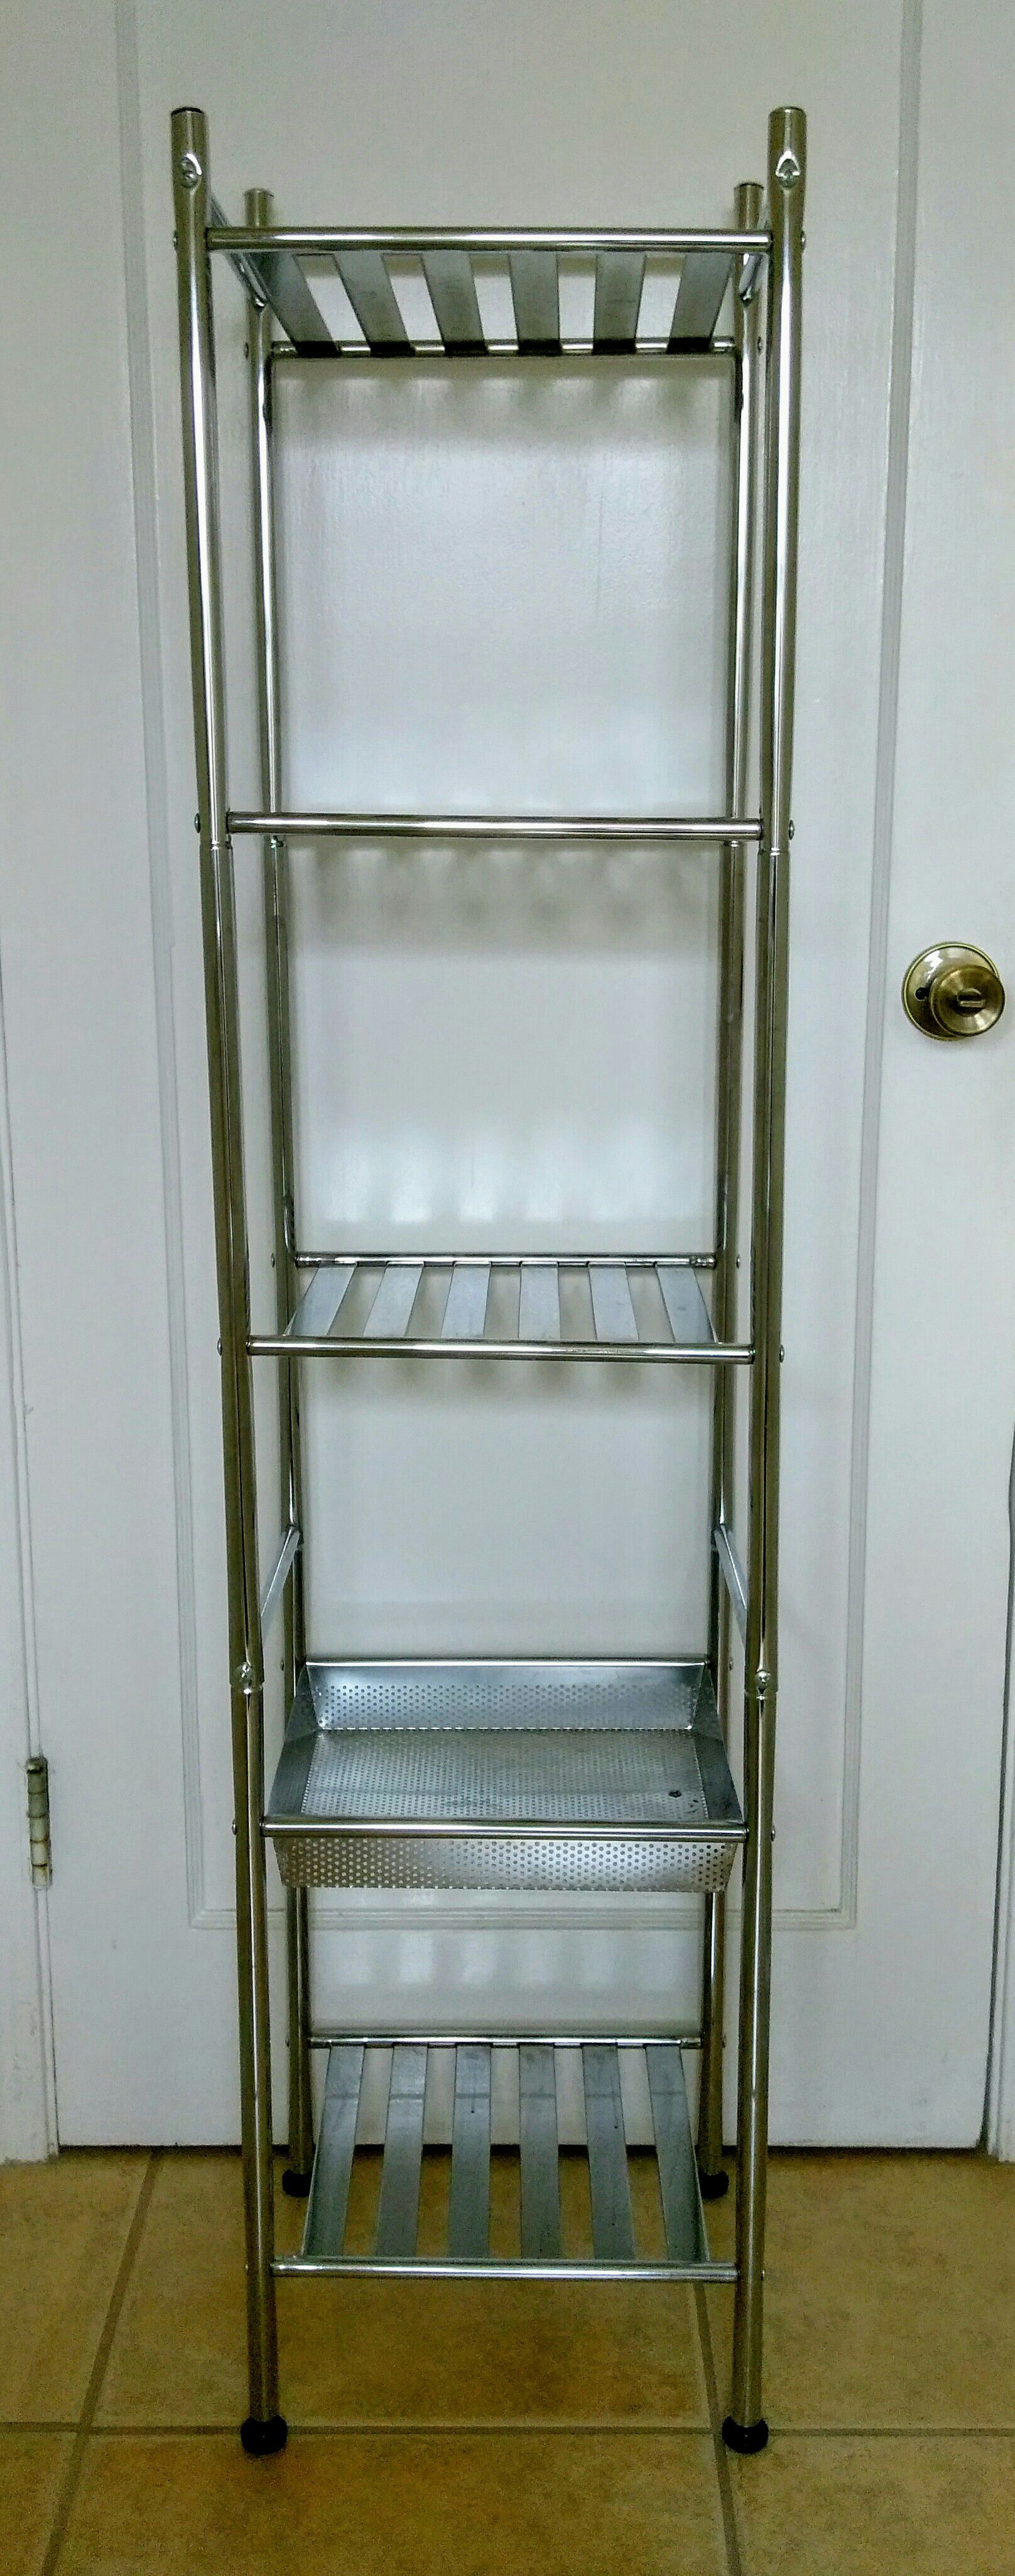 5-shelf bathroom kitchen storage chrome tower rack